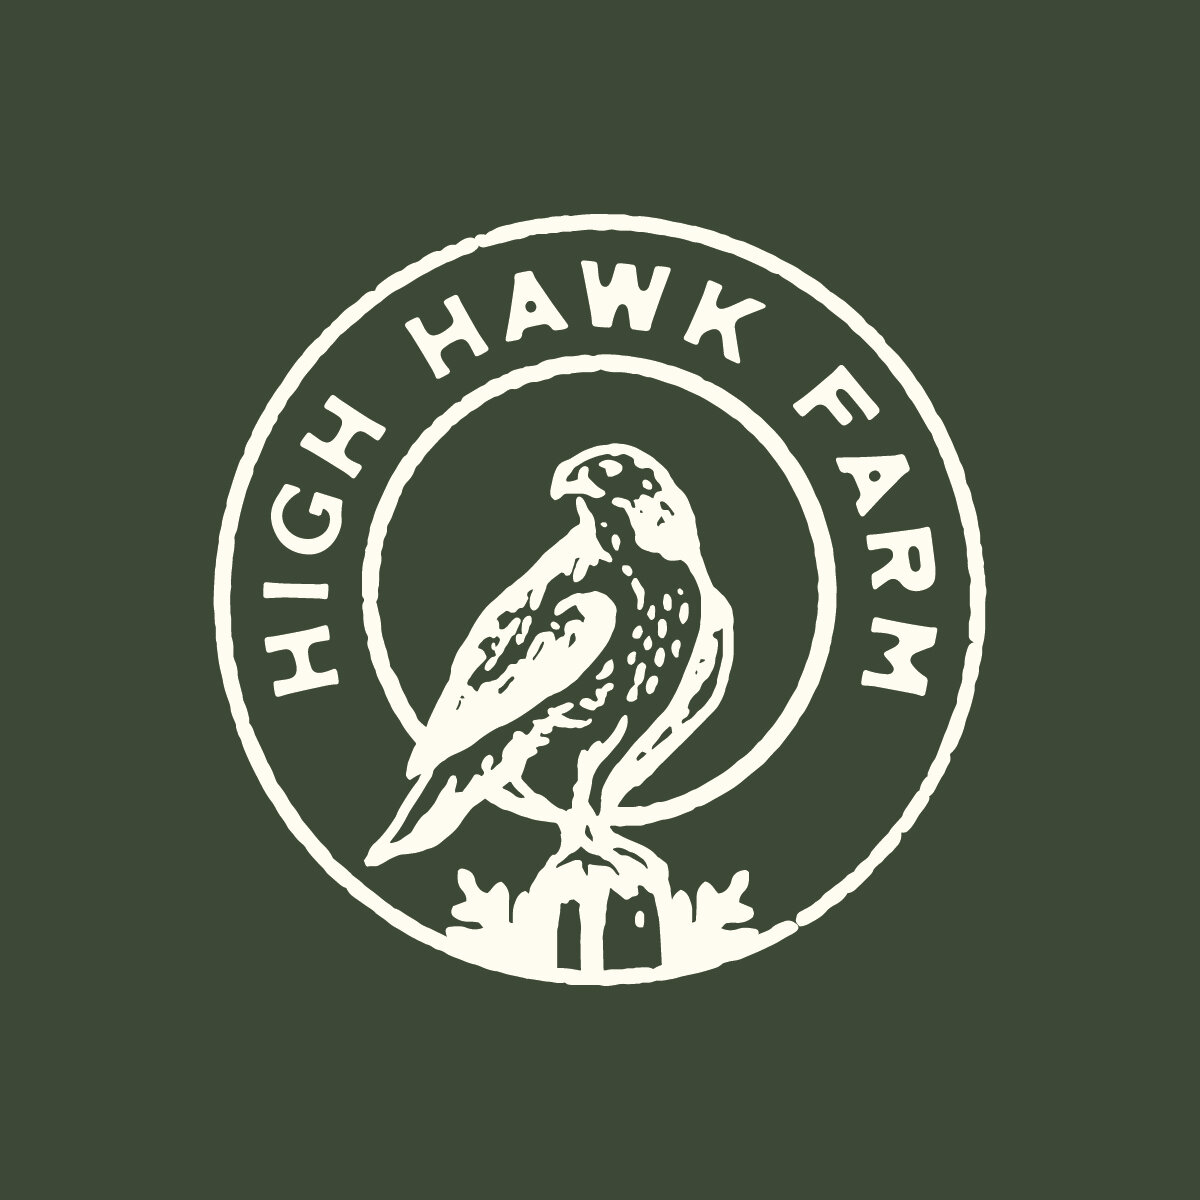 High Hawk Farm Secondary Logo - with Plants- Cream on Green.jpg